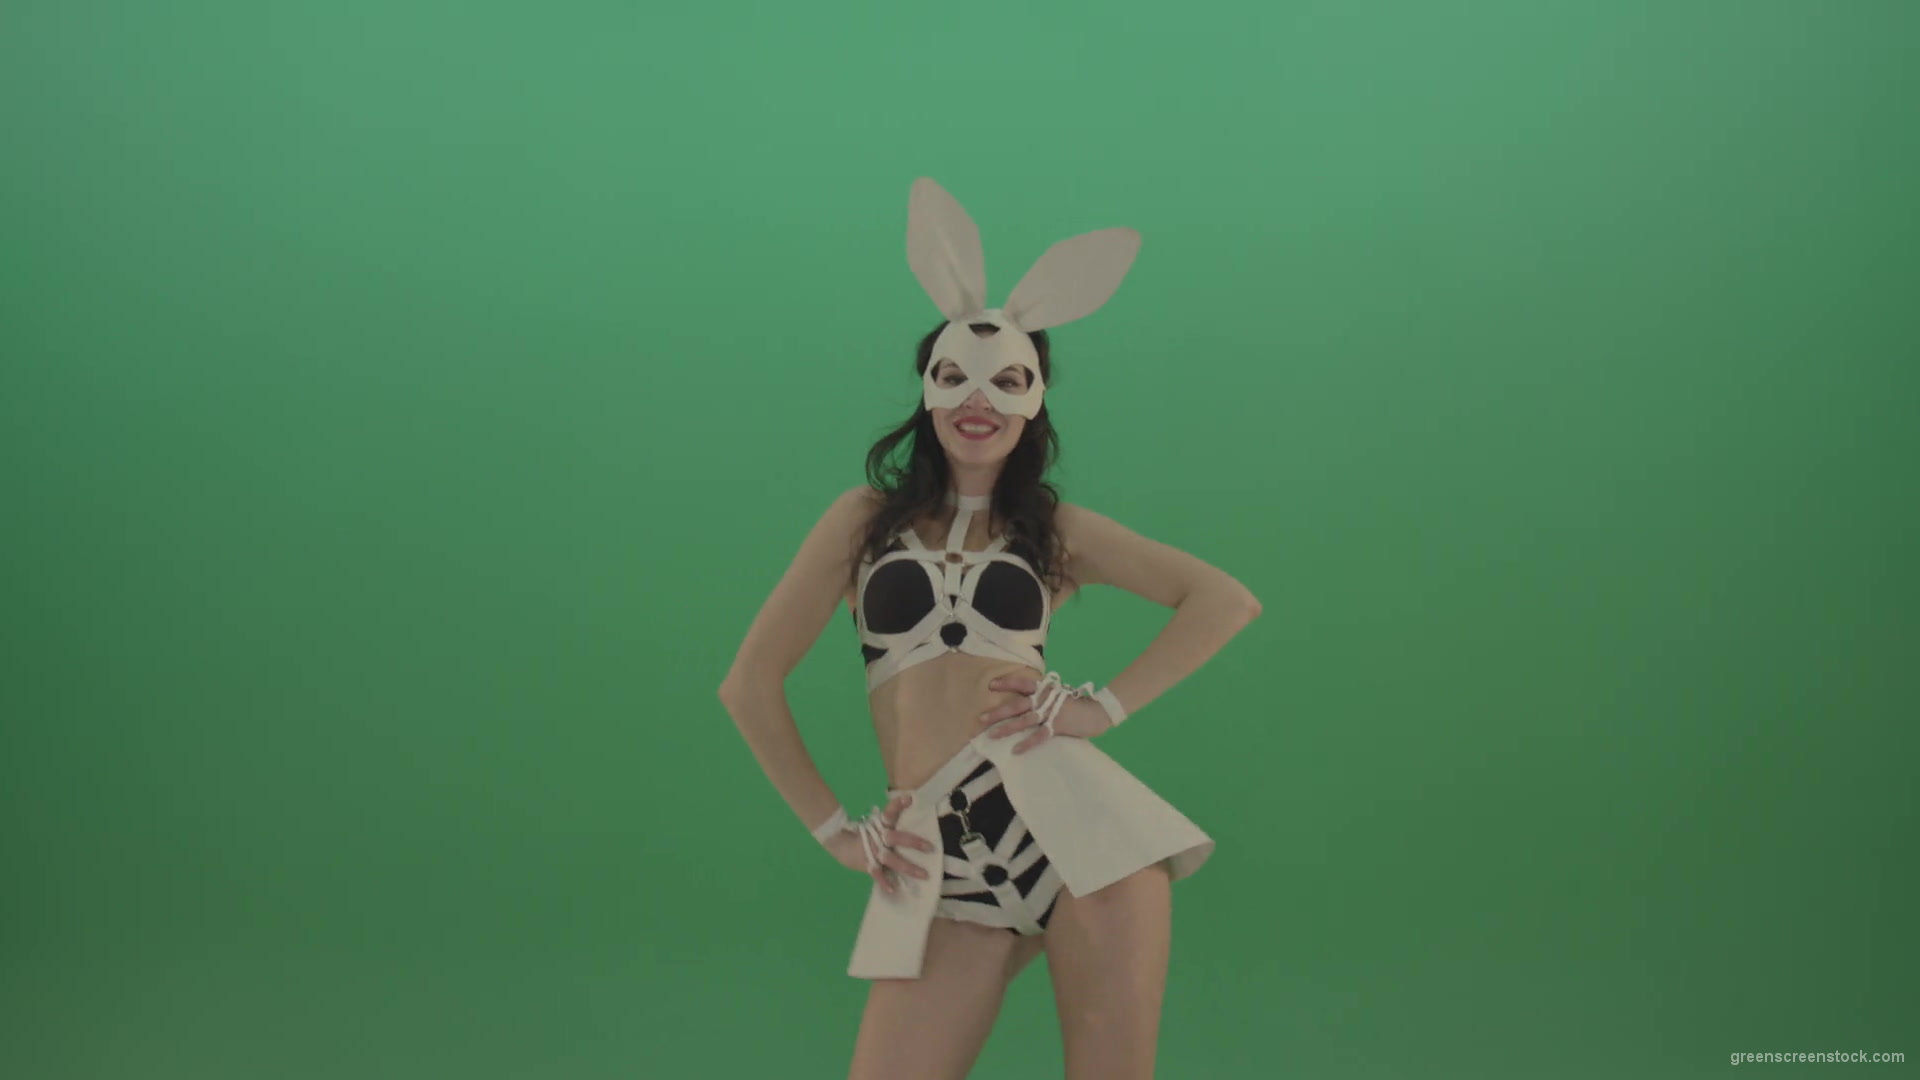 White-Rabbit-Girl-sexy-posing-dancing-in-bunny-style-over-Green-Screen-1920_008 Green Screen Stock